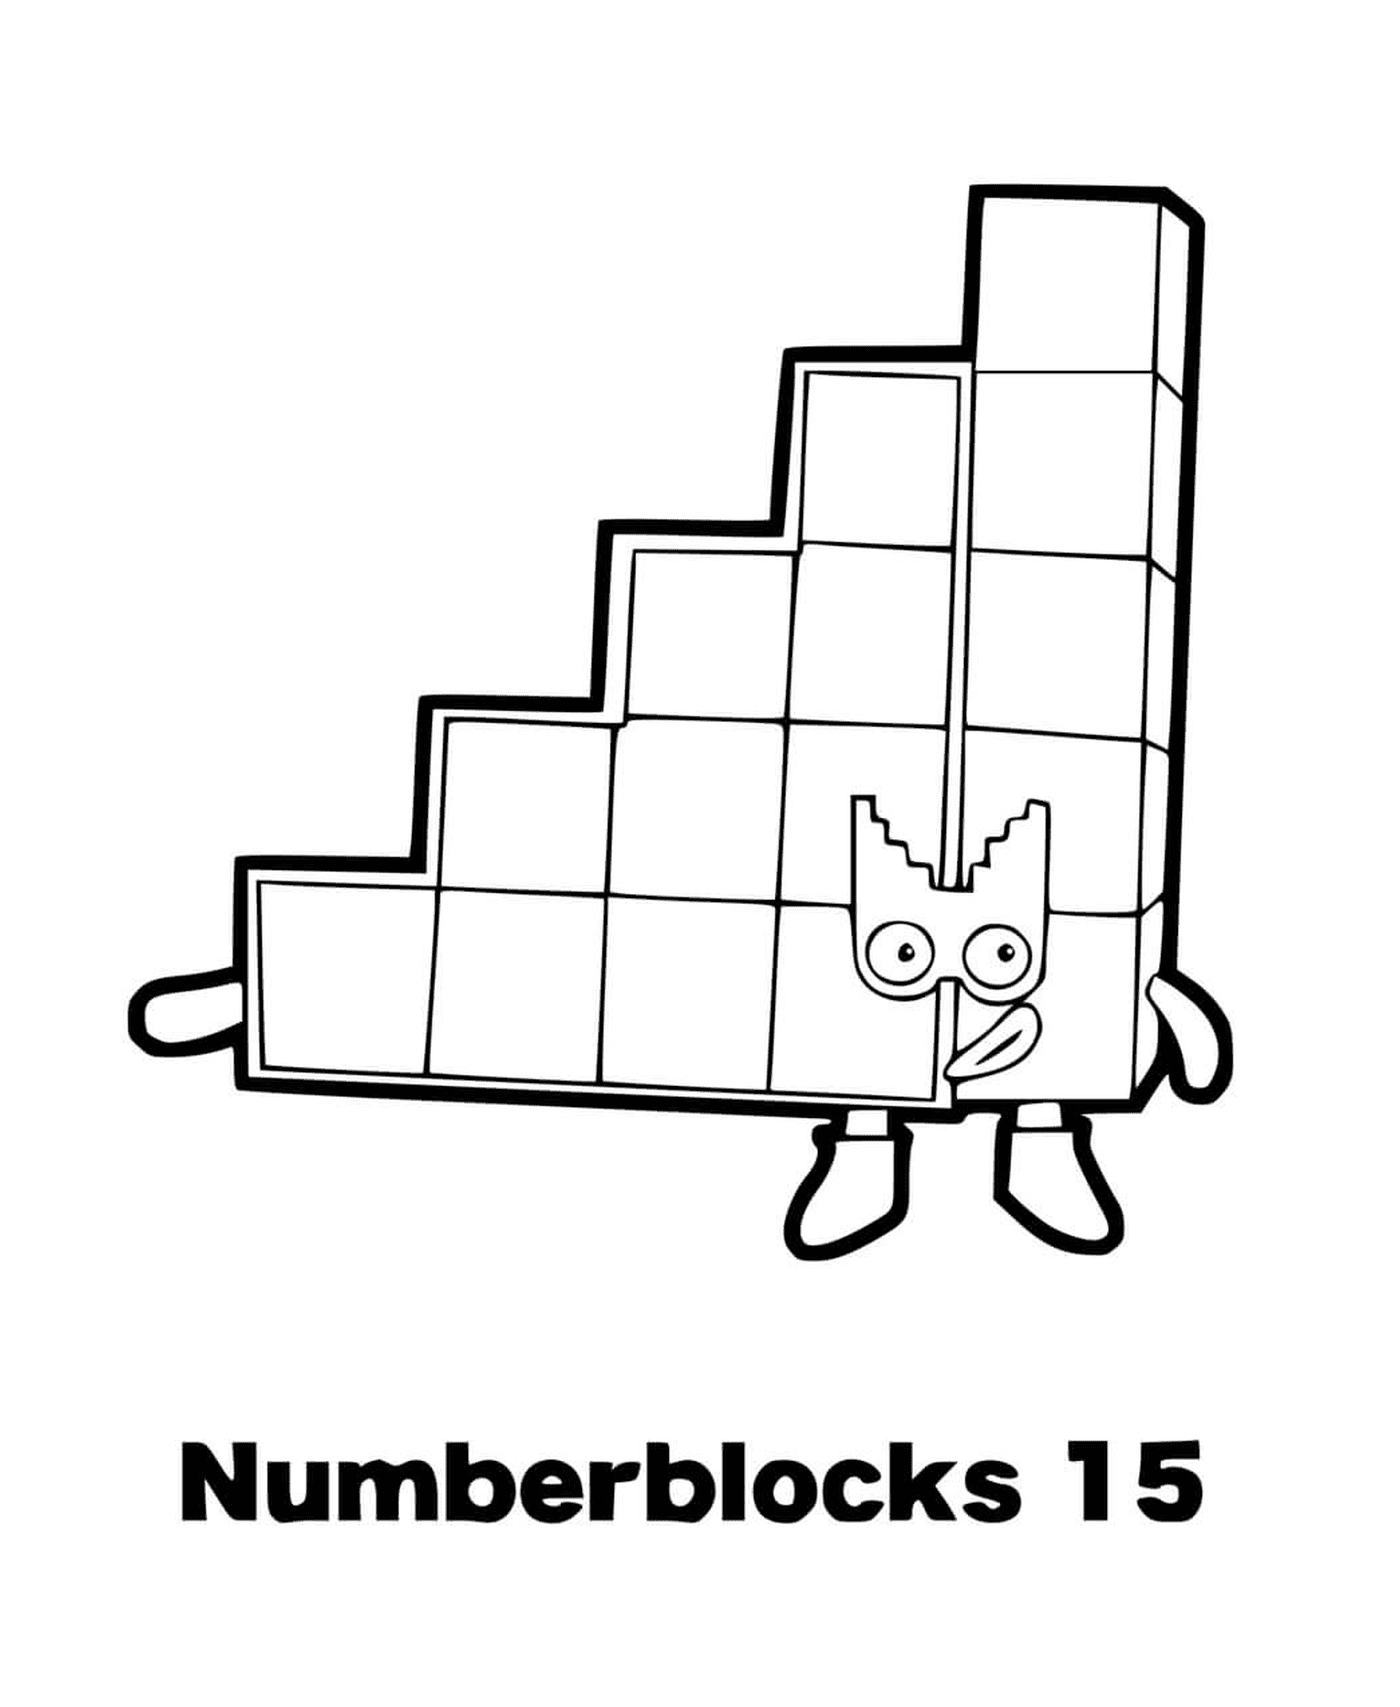  Numberblocks number 15, animated character 